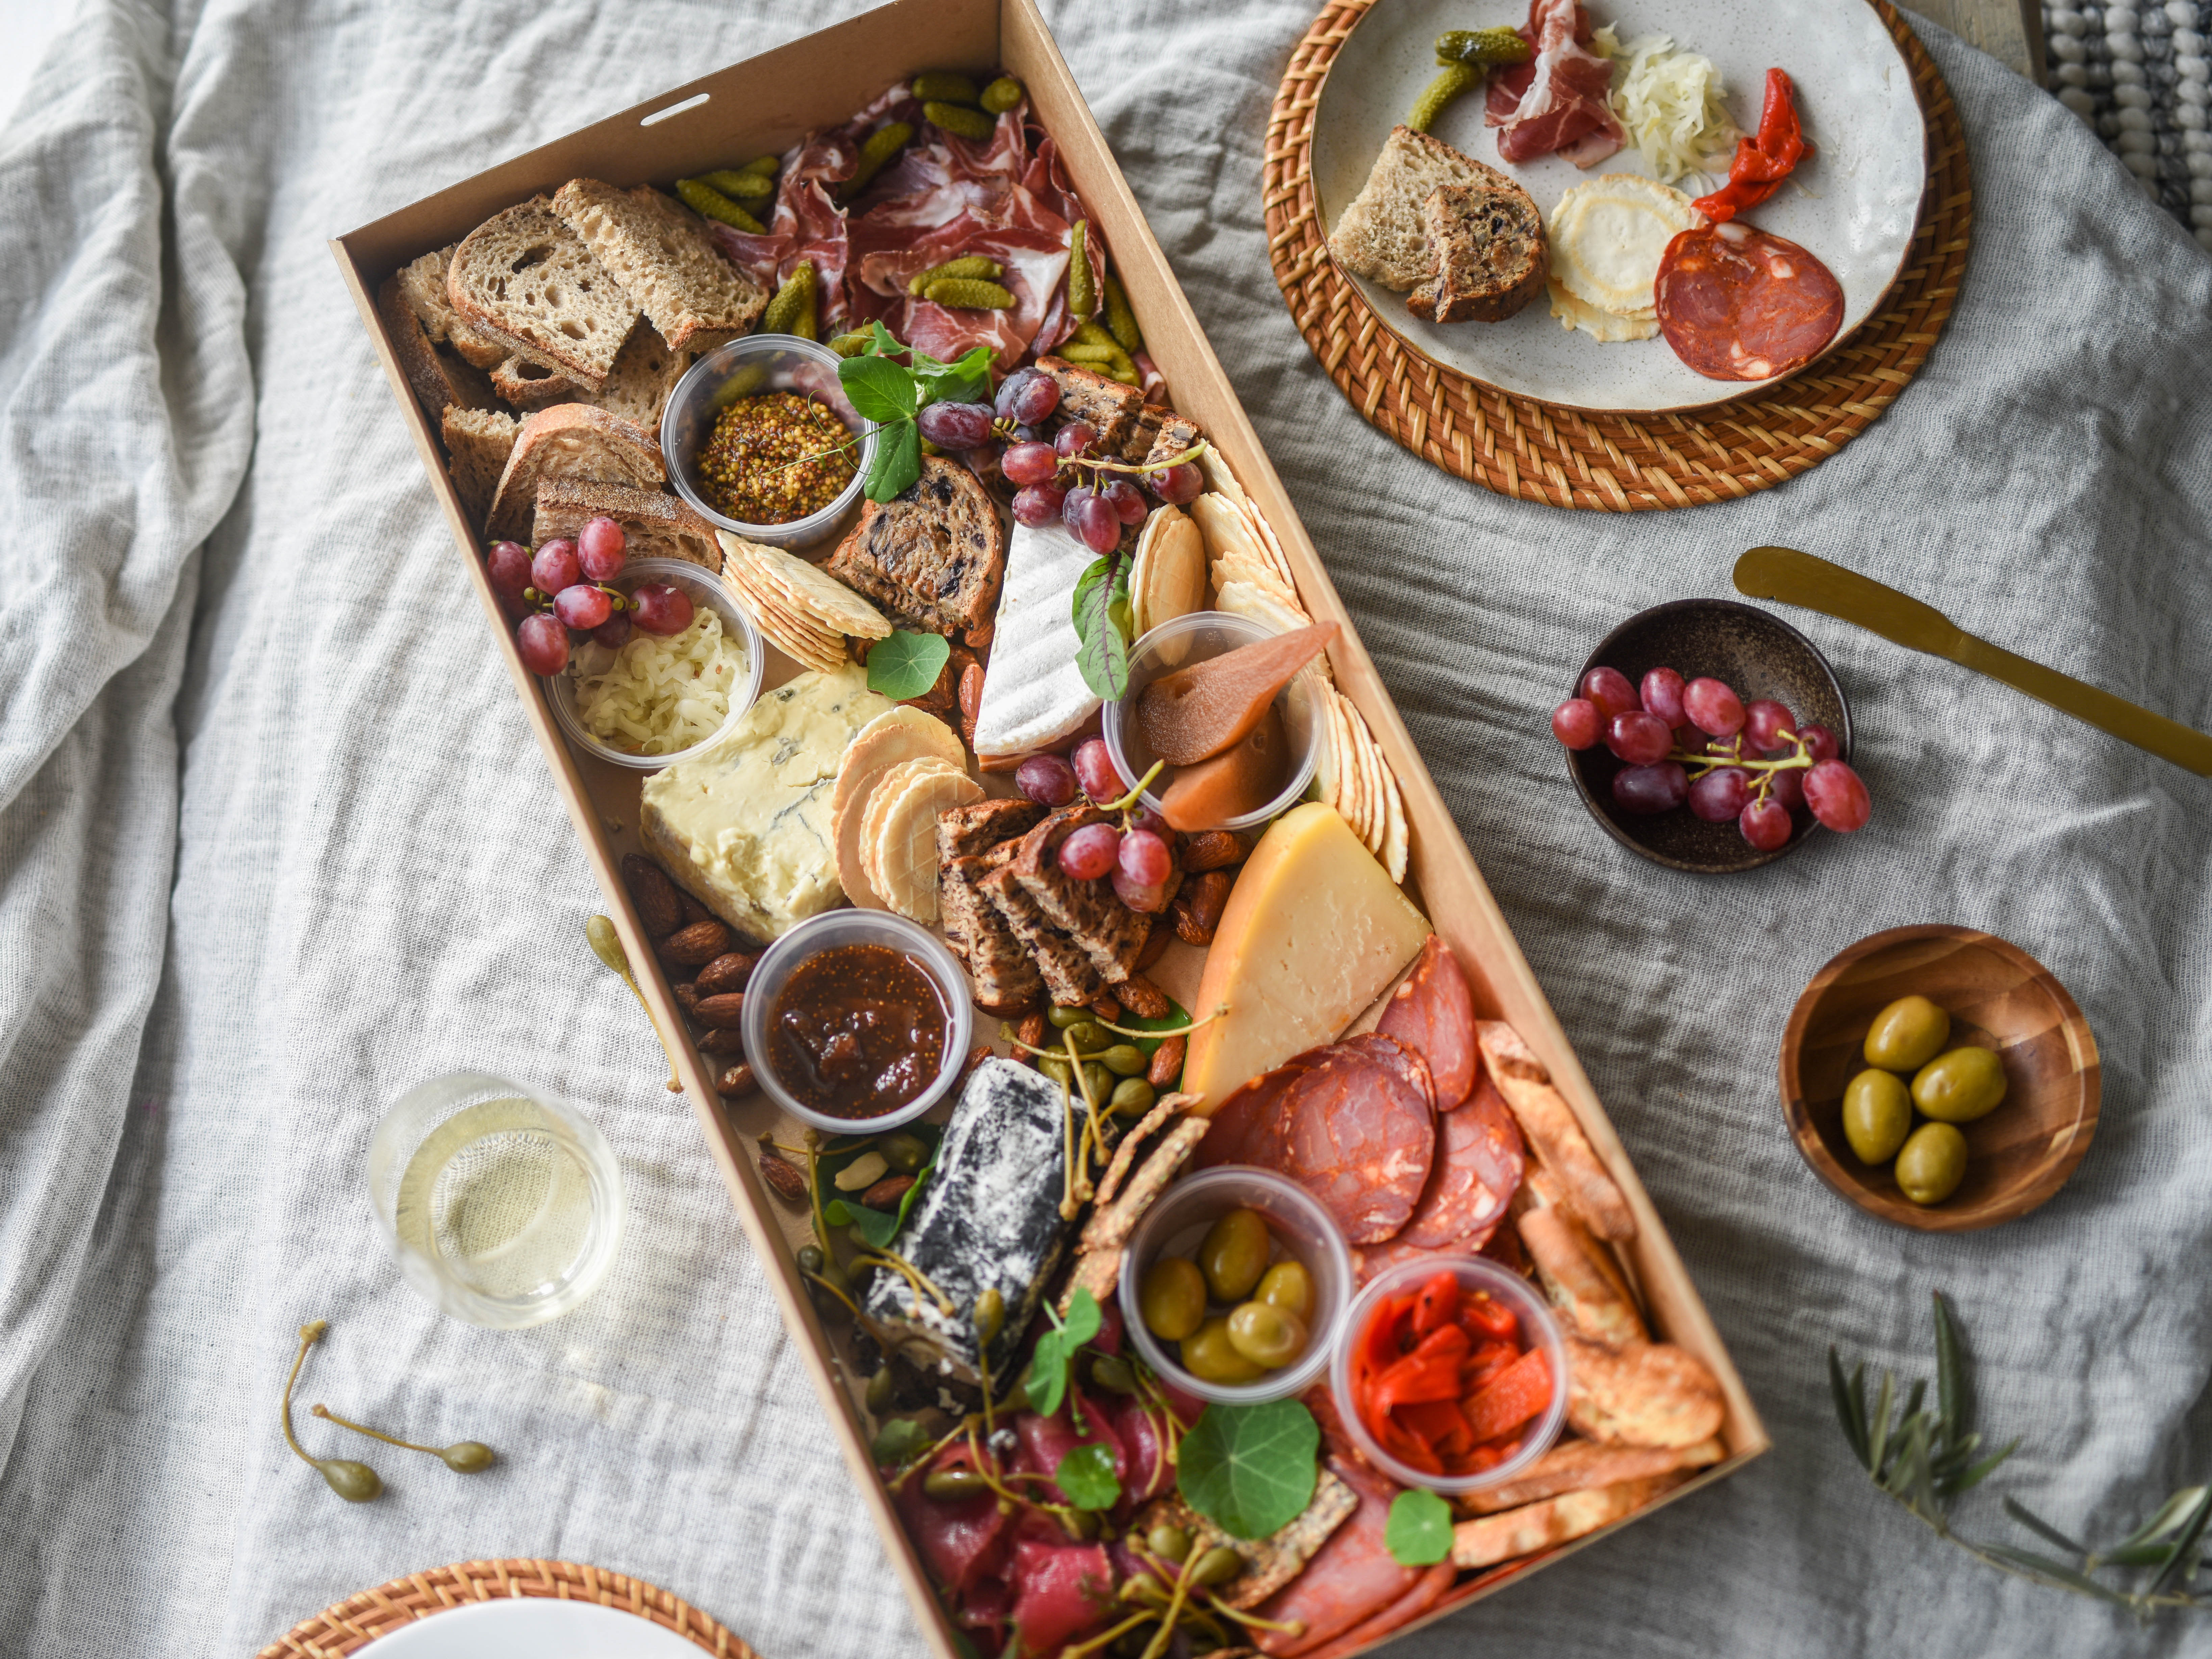 Tasting Board. Image by Lisa Holmen via Shutterstock.